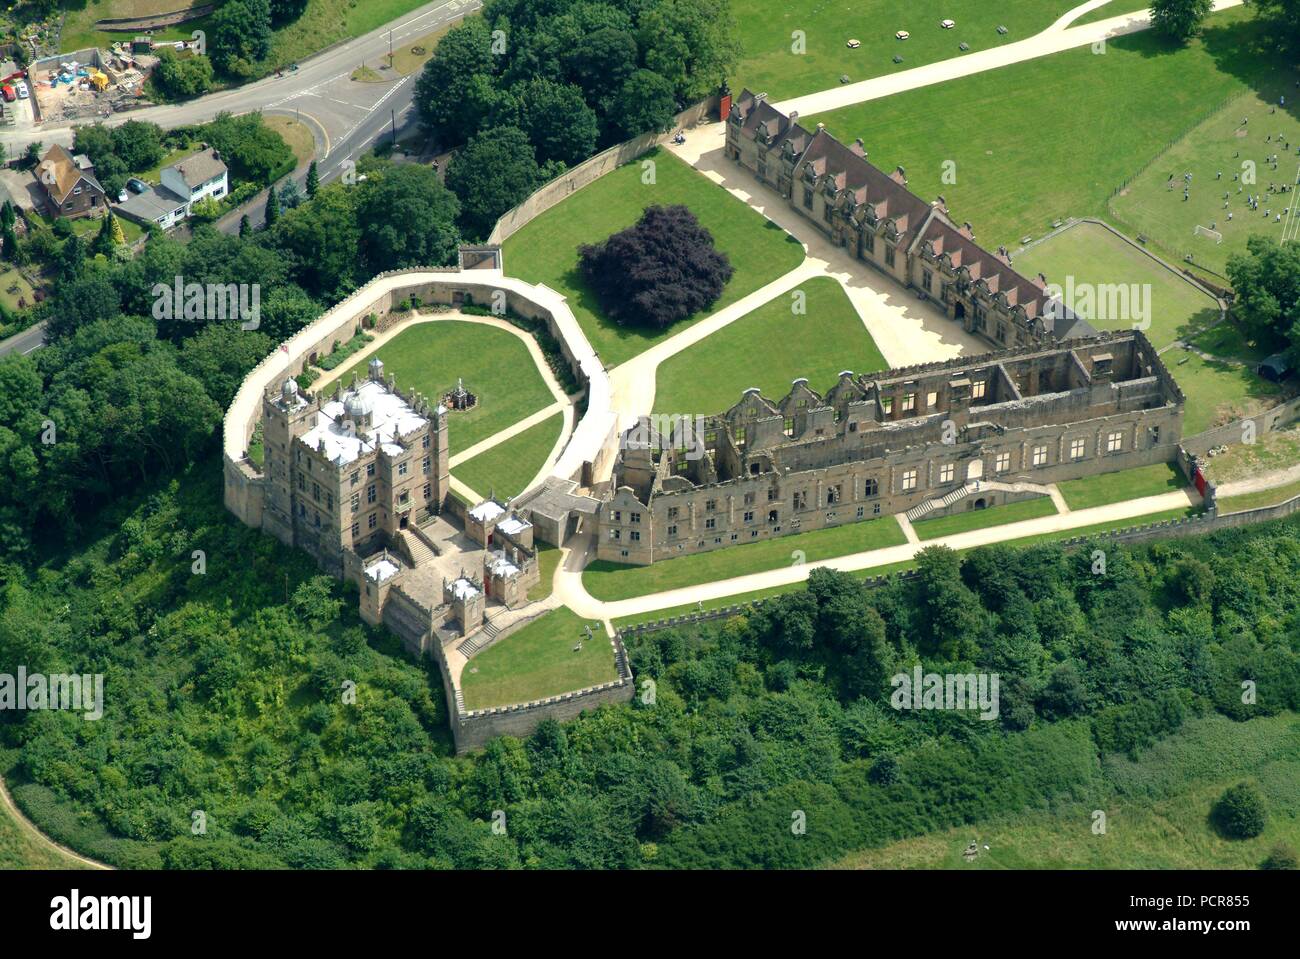 El castillo de Bolsover. Artista: Inglaterra histórica personal del fotógrafo. Foto de stock